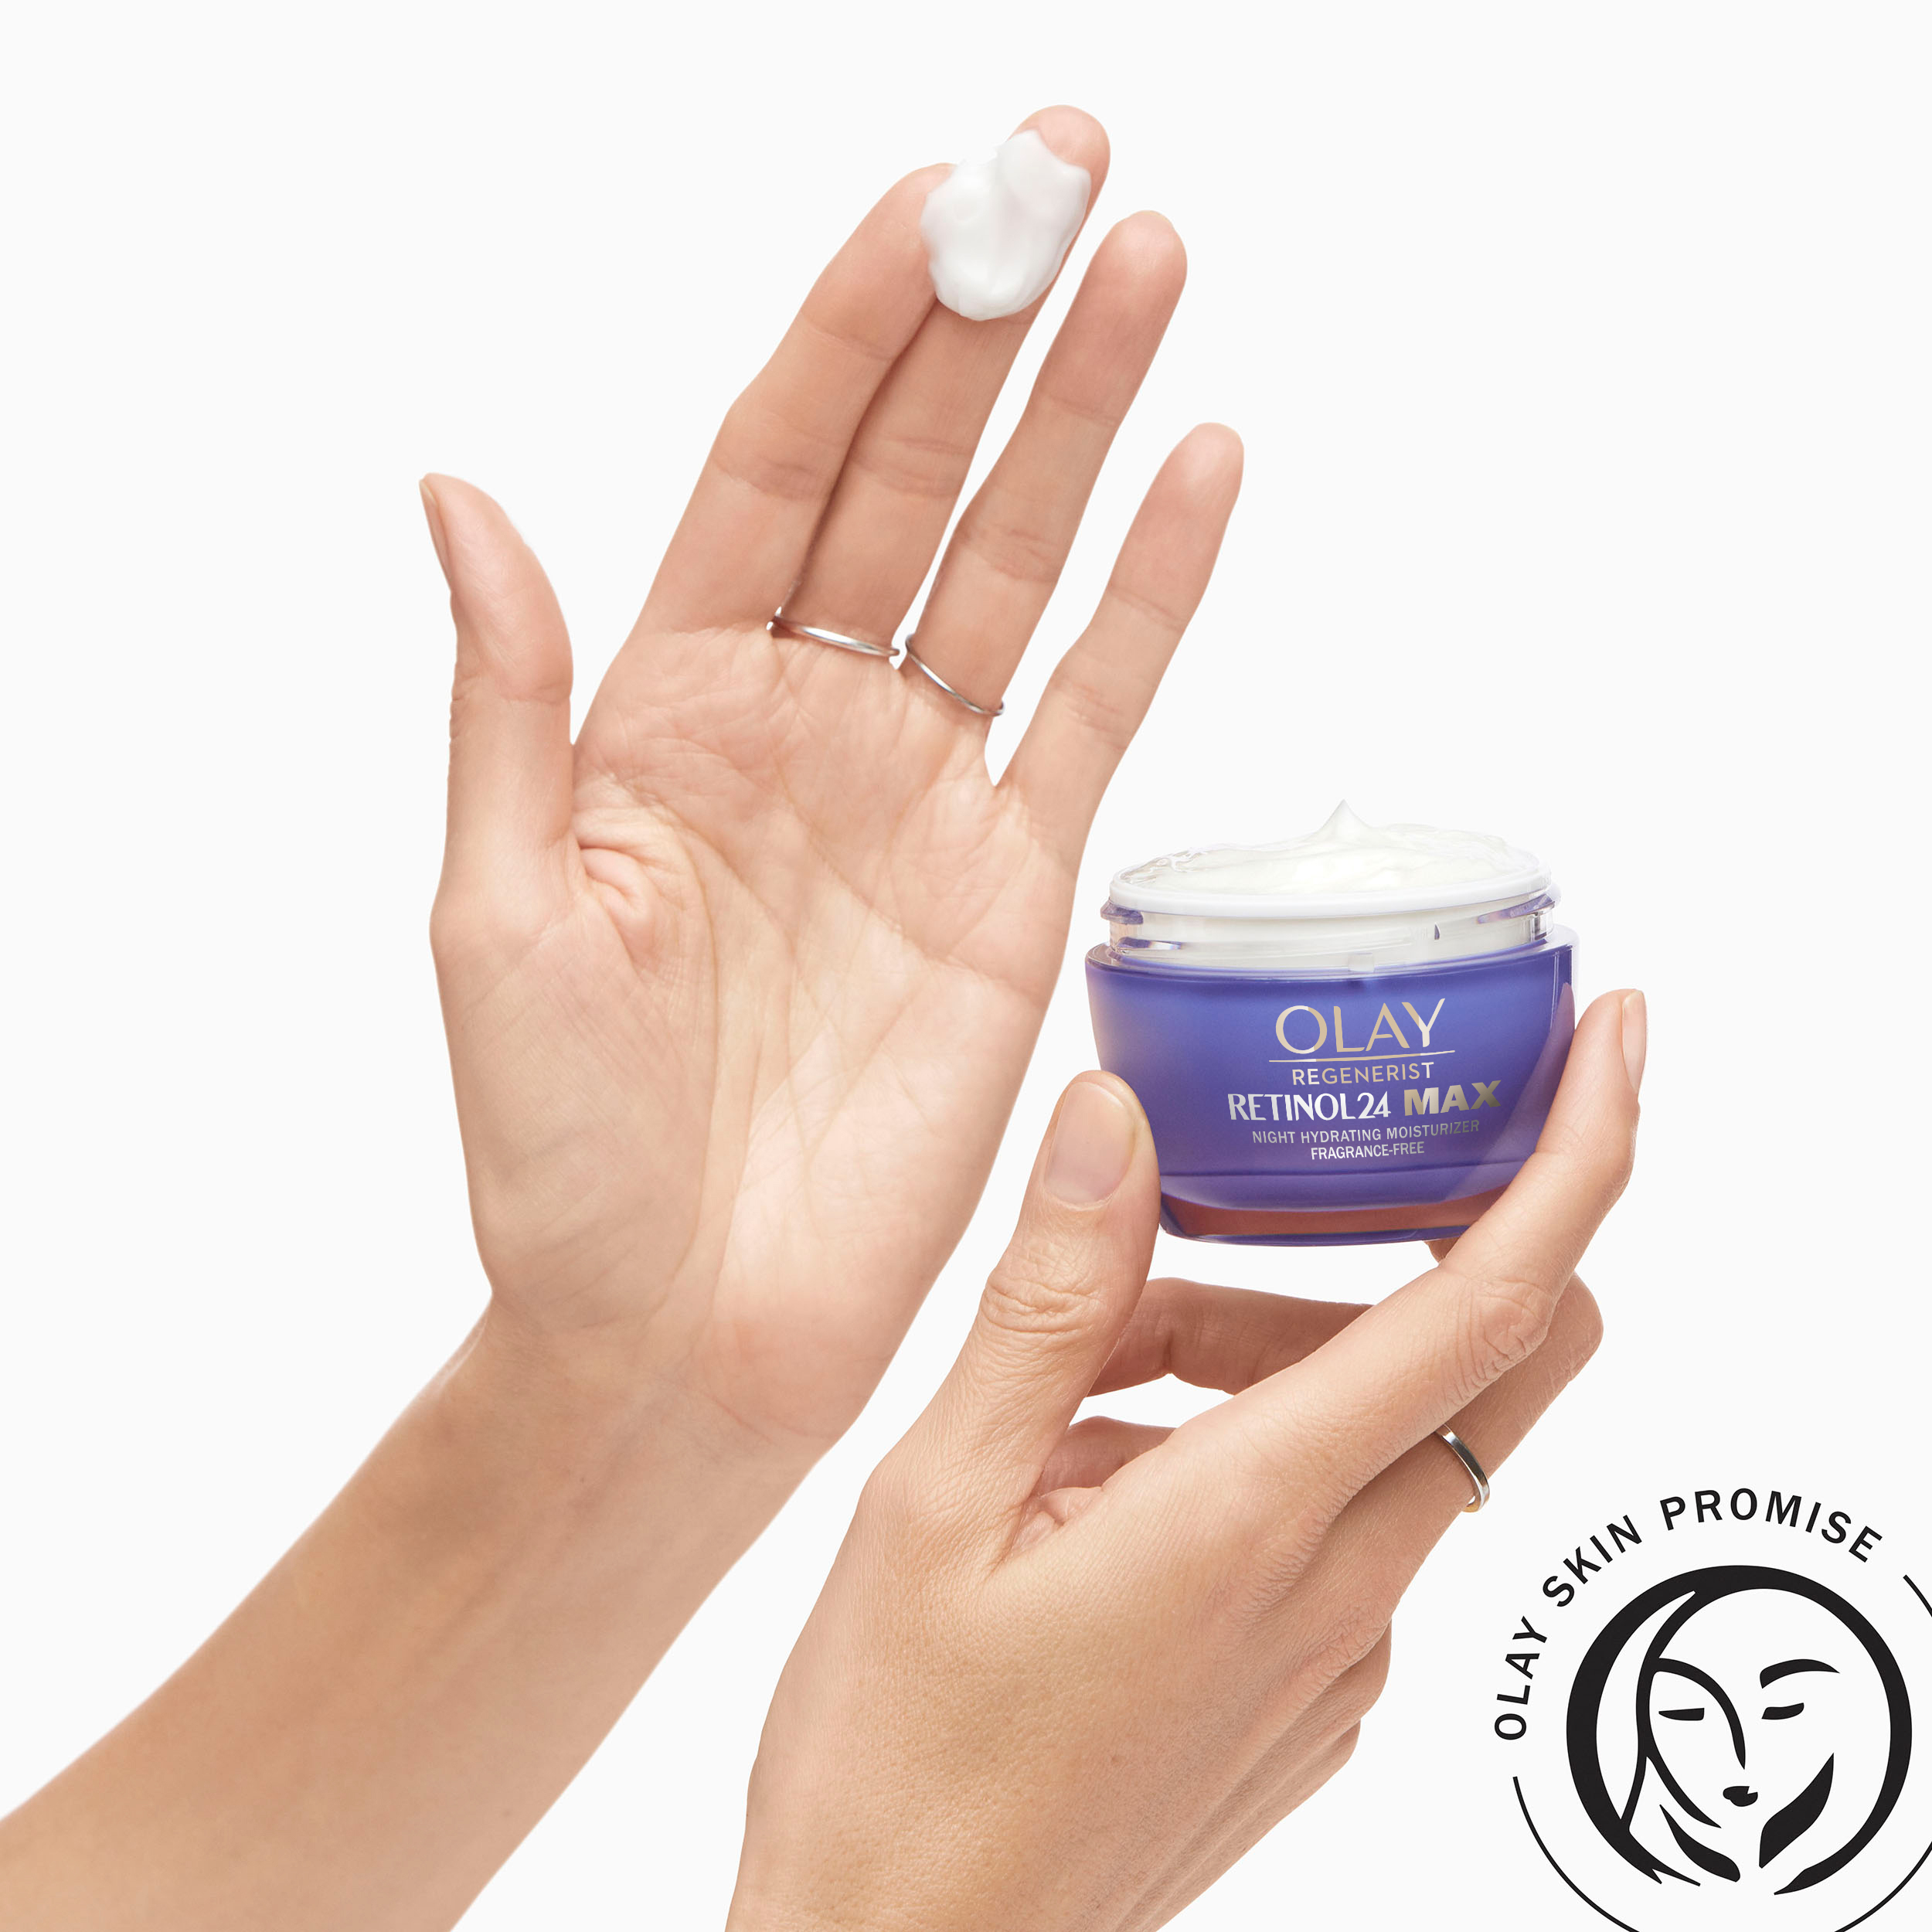 Olay Skincare Regenerist Retinol 24 MAX Night Face Moisturizer, Anti-Aging Cream, 1.7 oz Jar - image 6 of 14